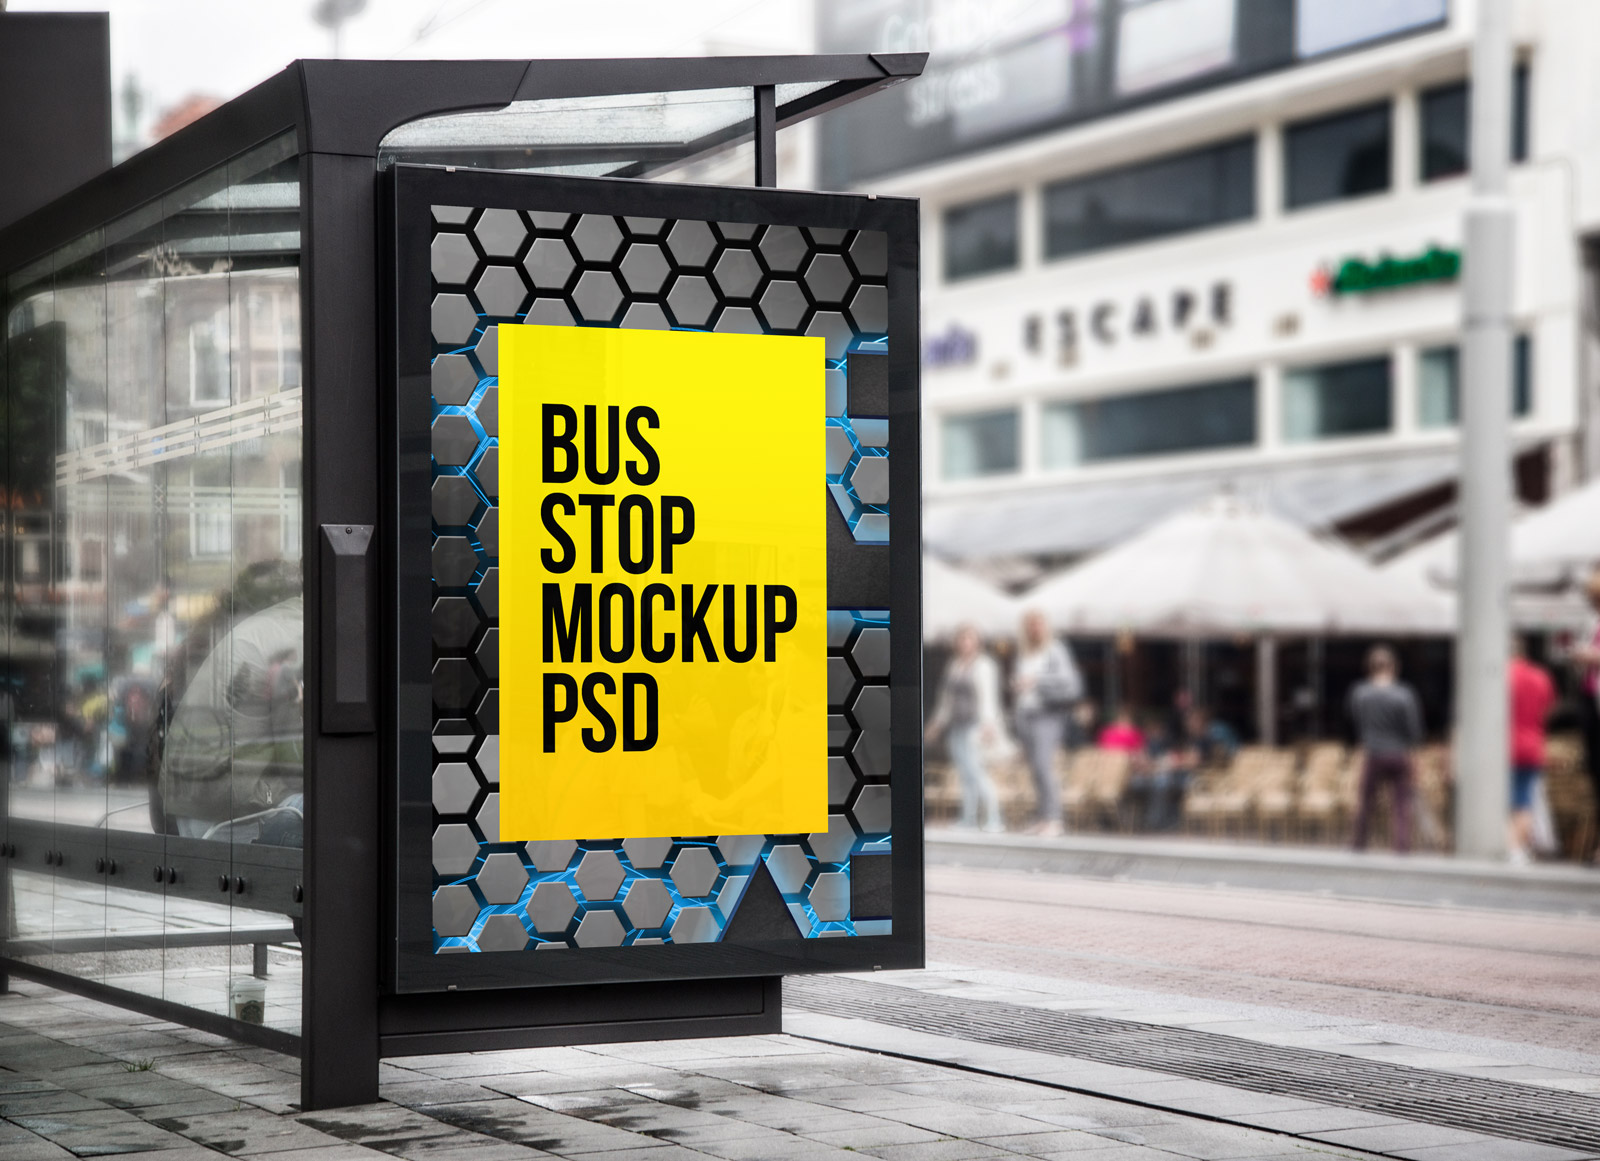 Mockup de parada de autobús publicitaria al aire libre